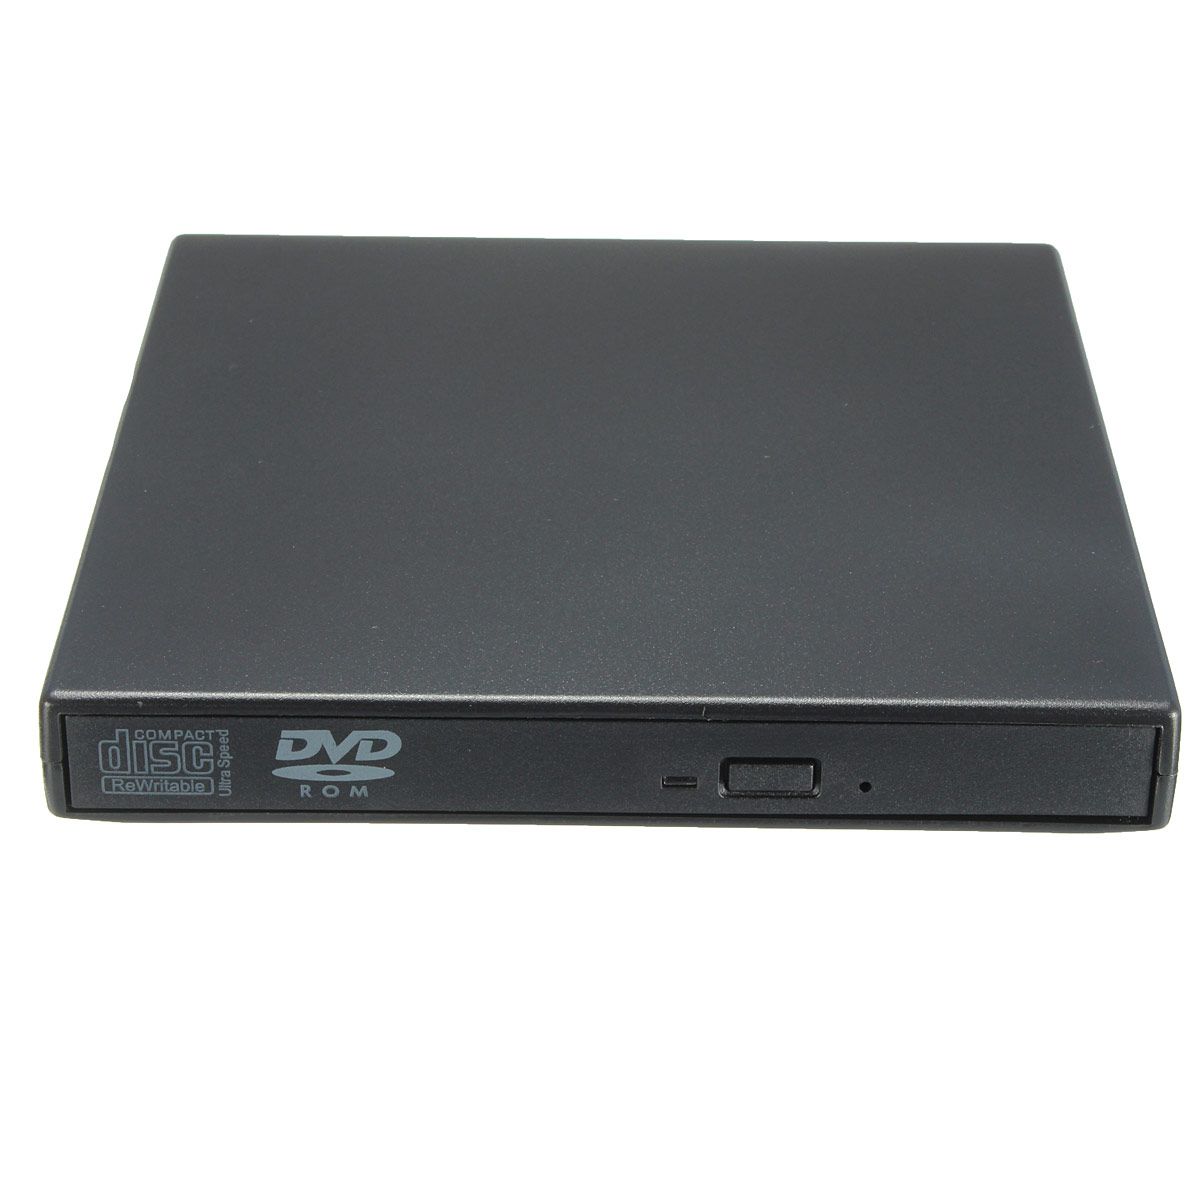 USB-20-External-CDDVD-Player-Optical-Drive-for-PC-Laptop-Windows-1552267